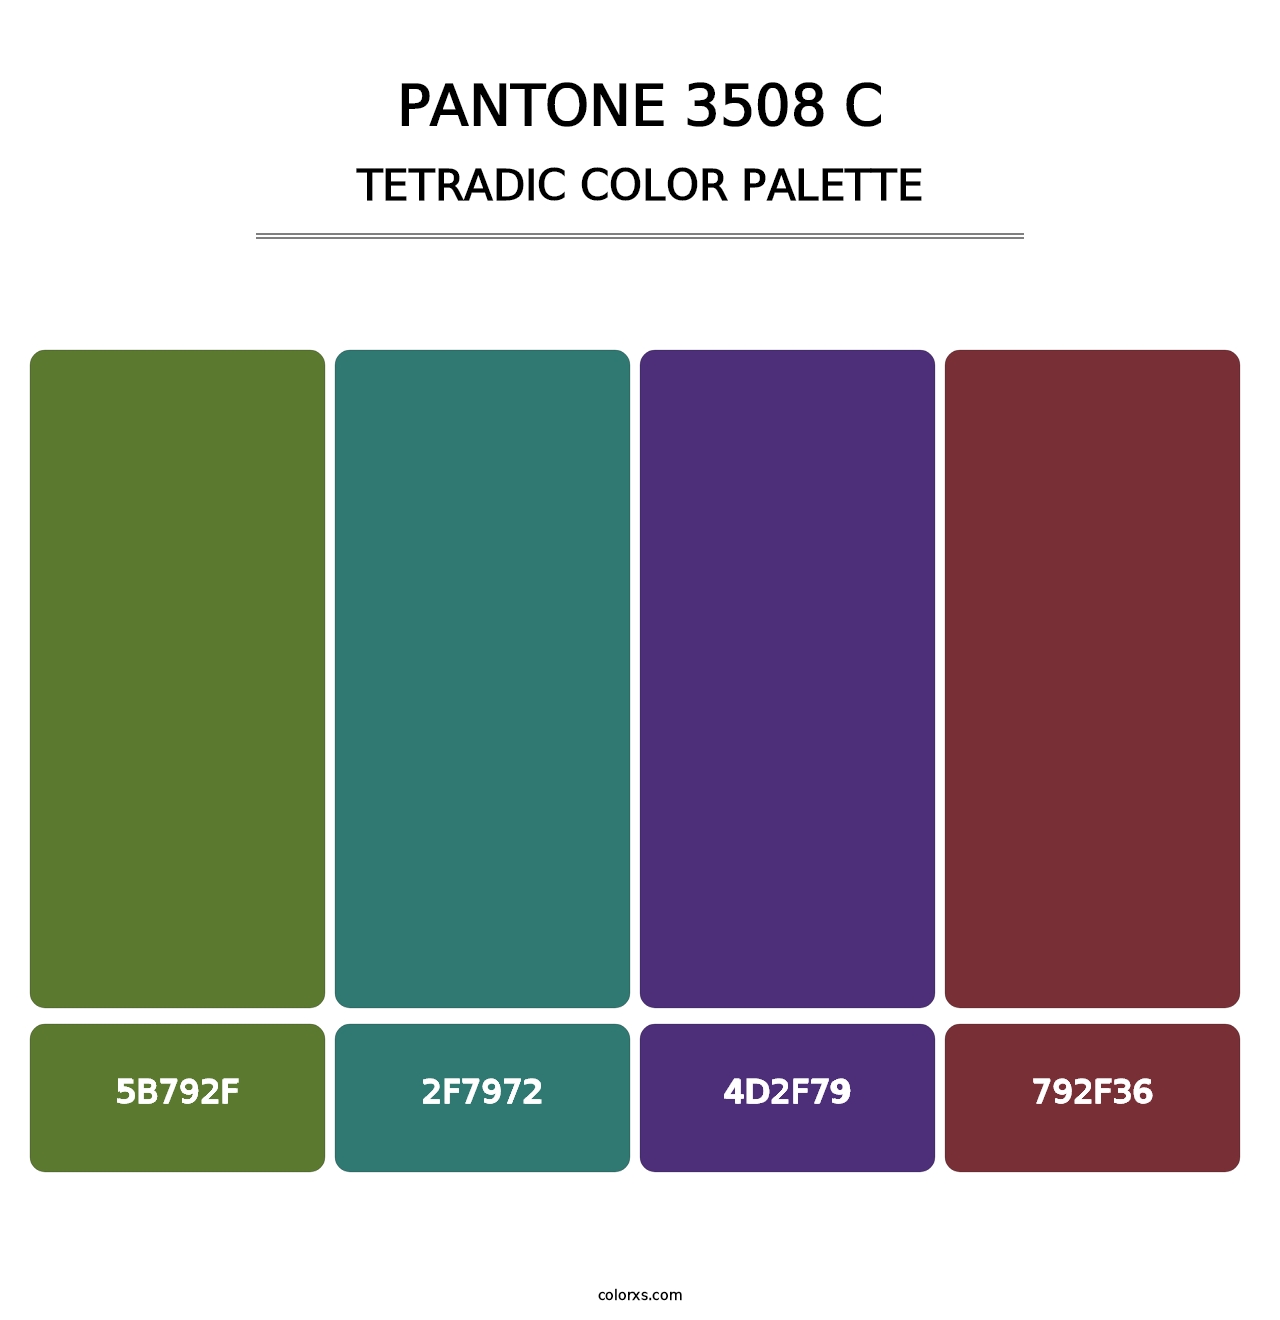 PANTONE 3508 C - Tetradic Color Palette